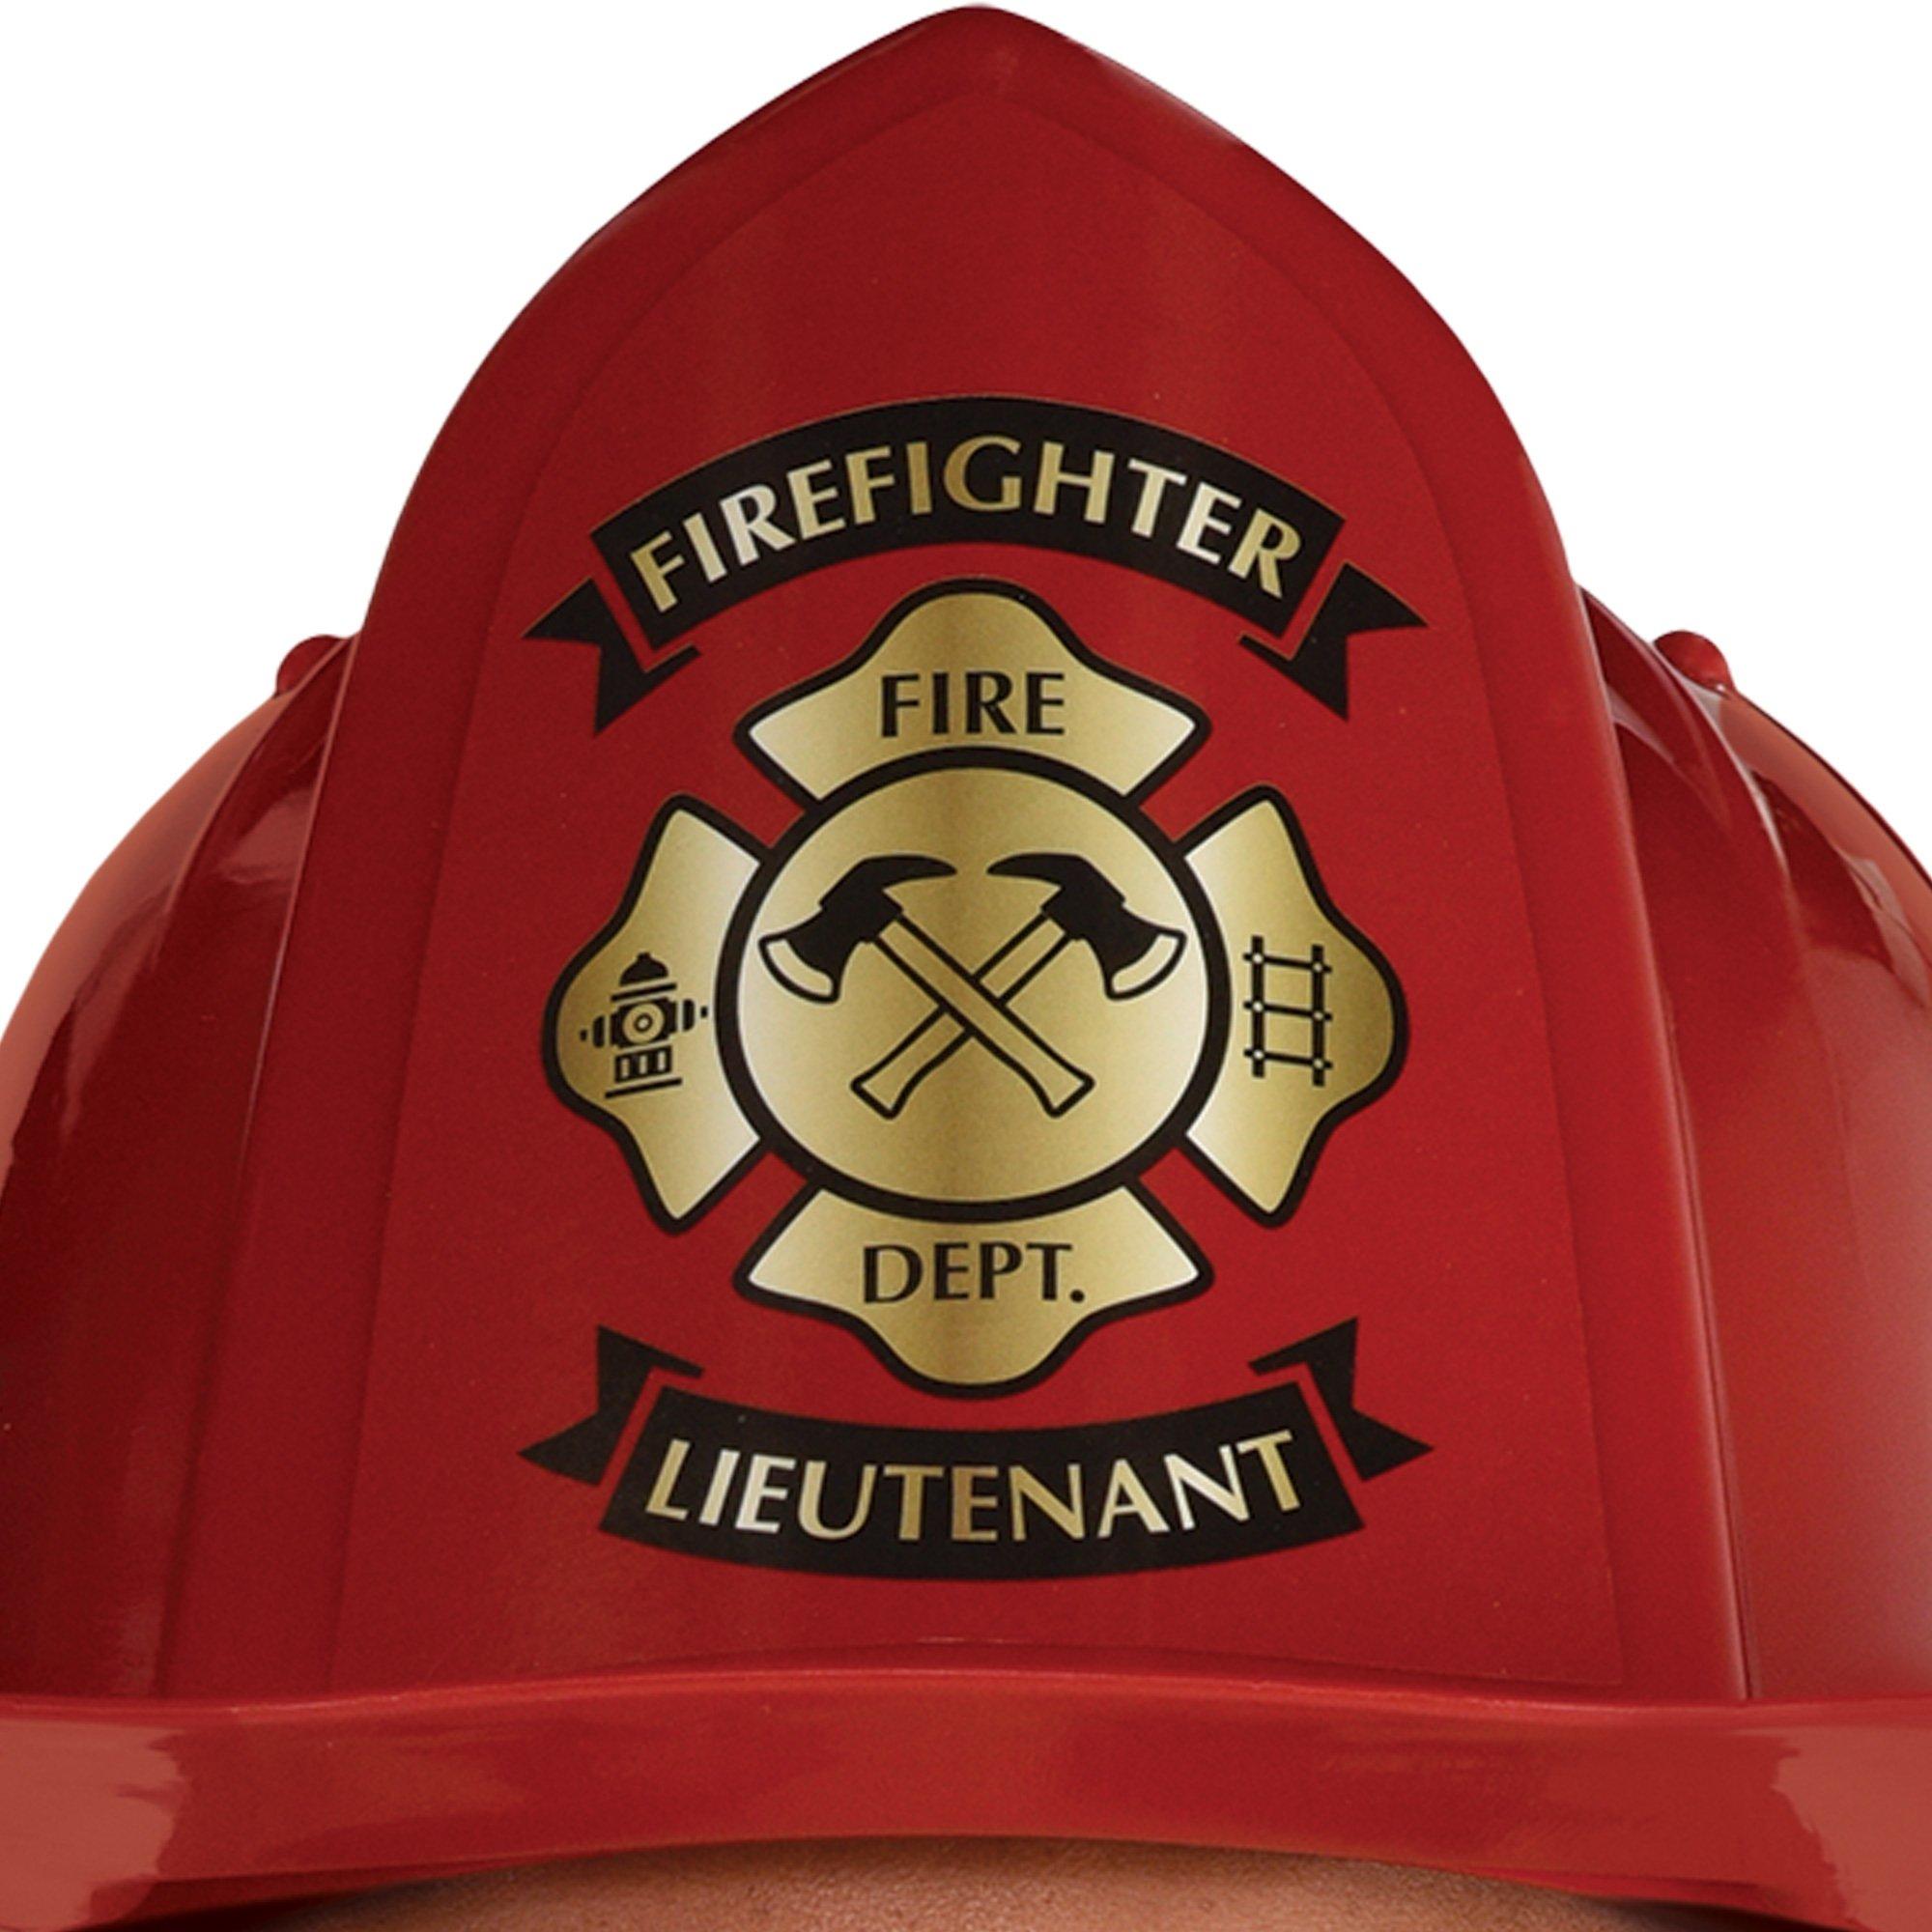 Firefighter Lieutenant Helmet for Adults